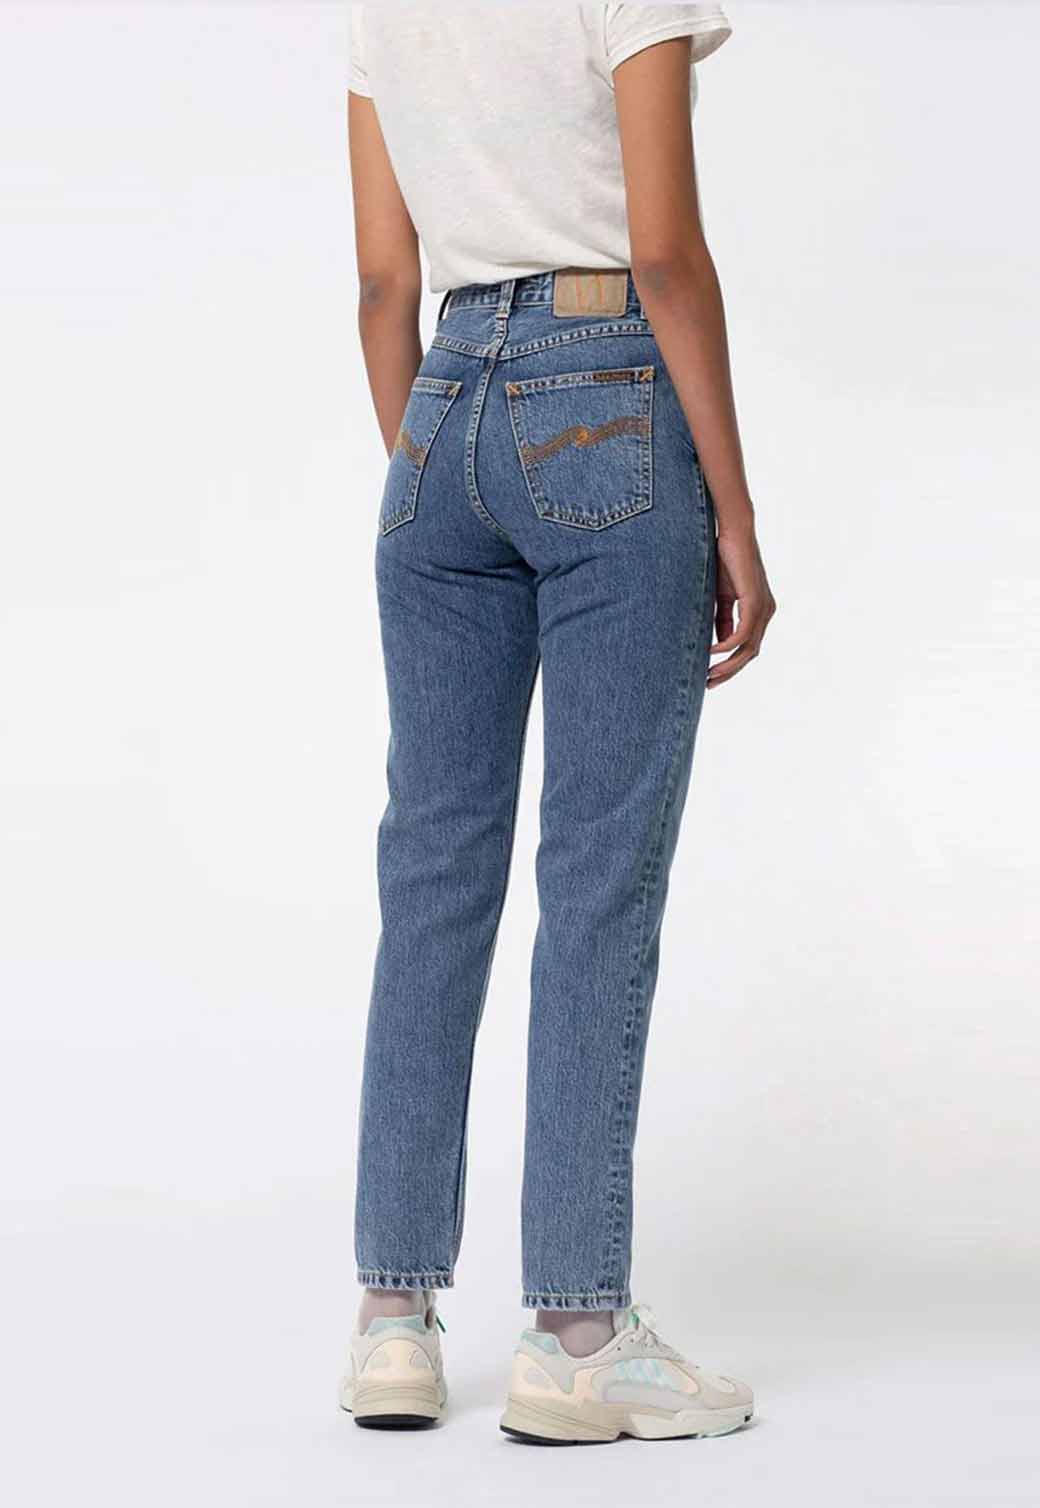 Lavender ג'ינס ארוך לנשים Breezy Britt - Friendly Blue NUDIE